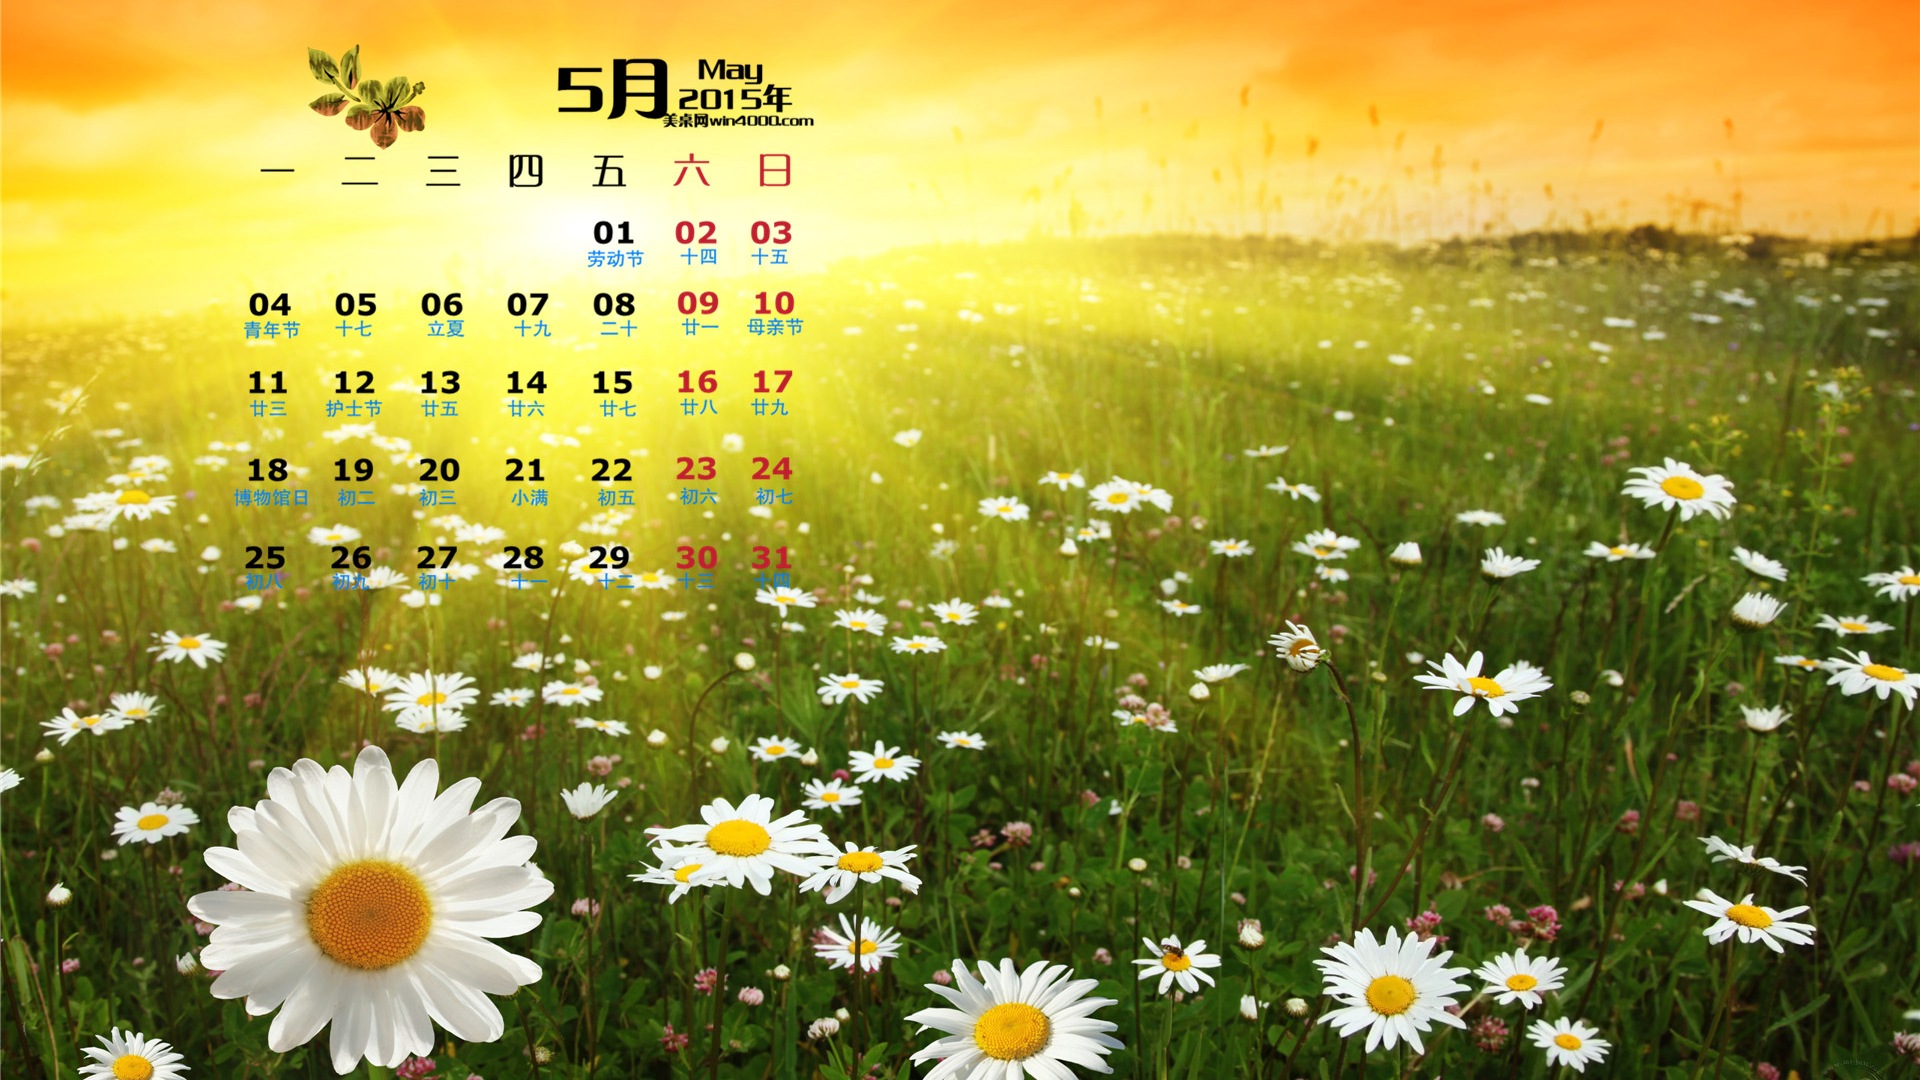 Mai 2015 calendar fond d'écran (1) #15 - 1920x1080